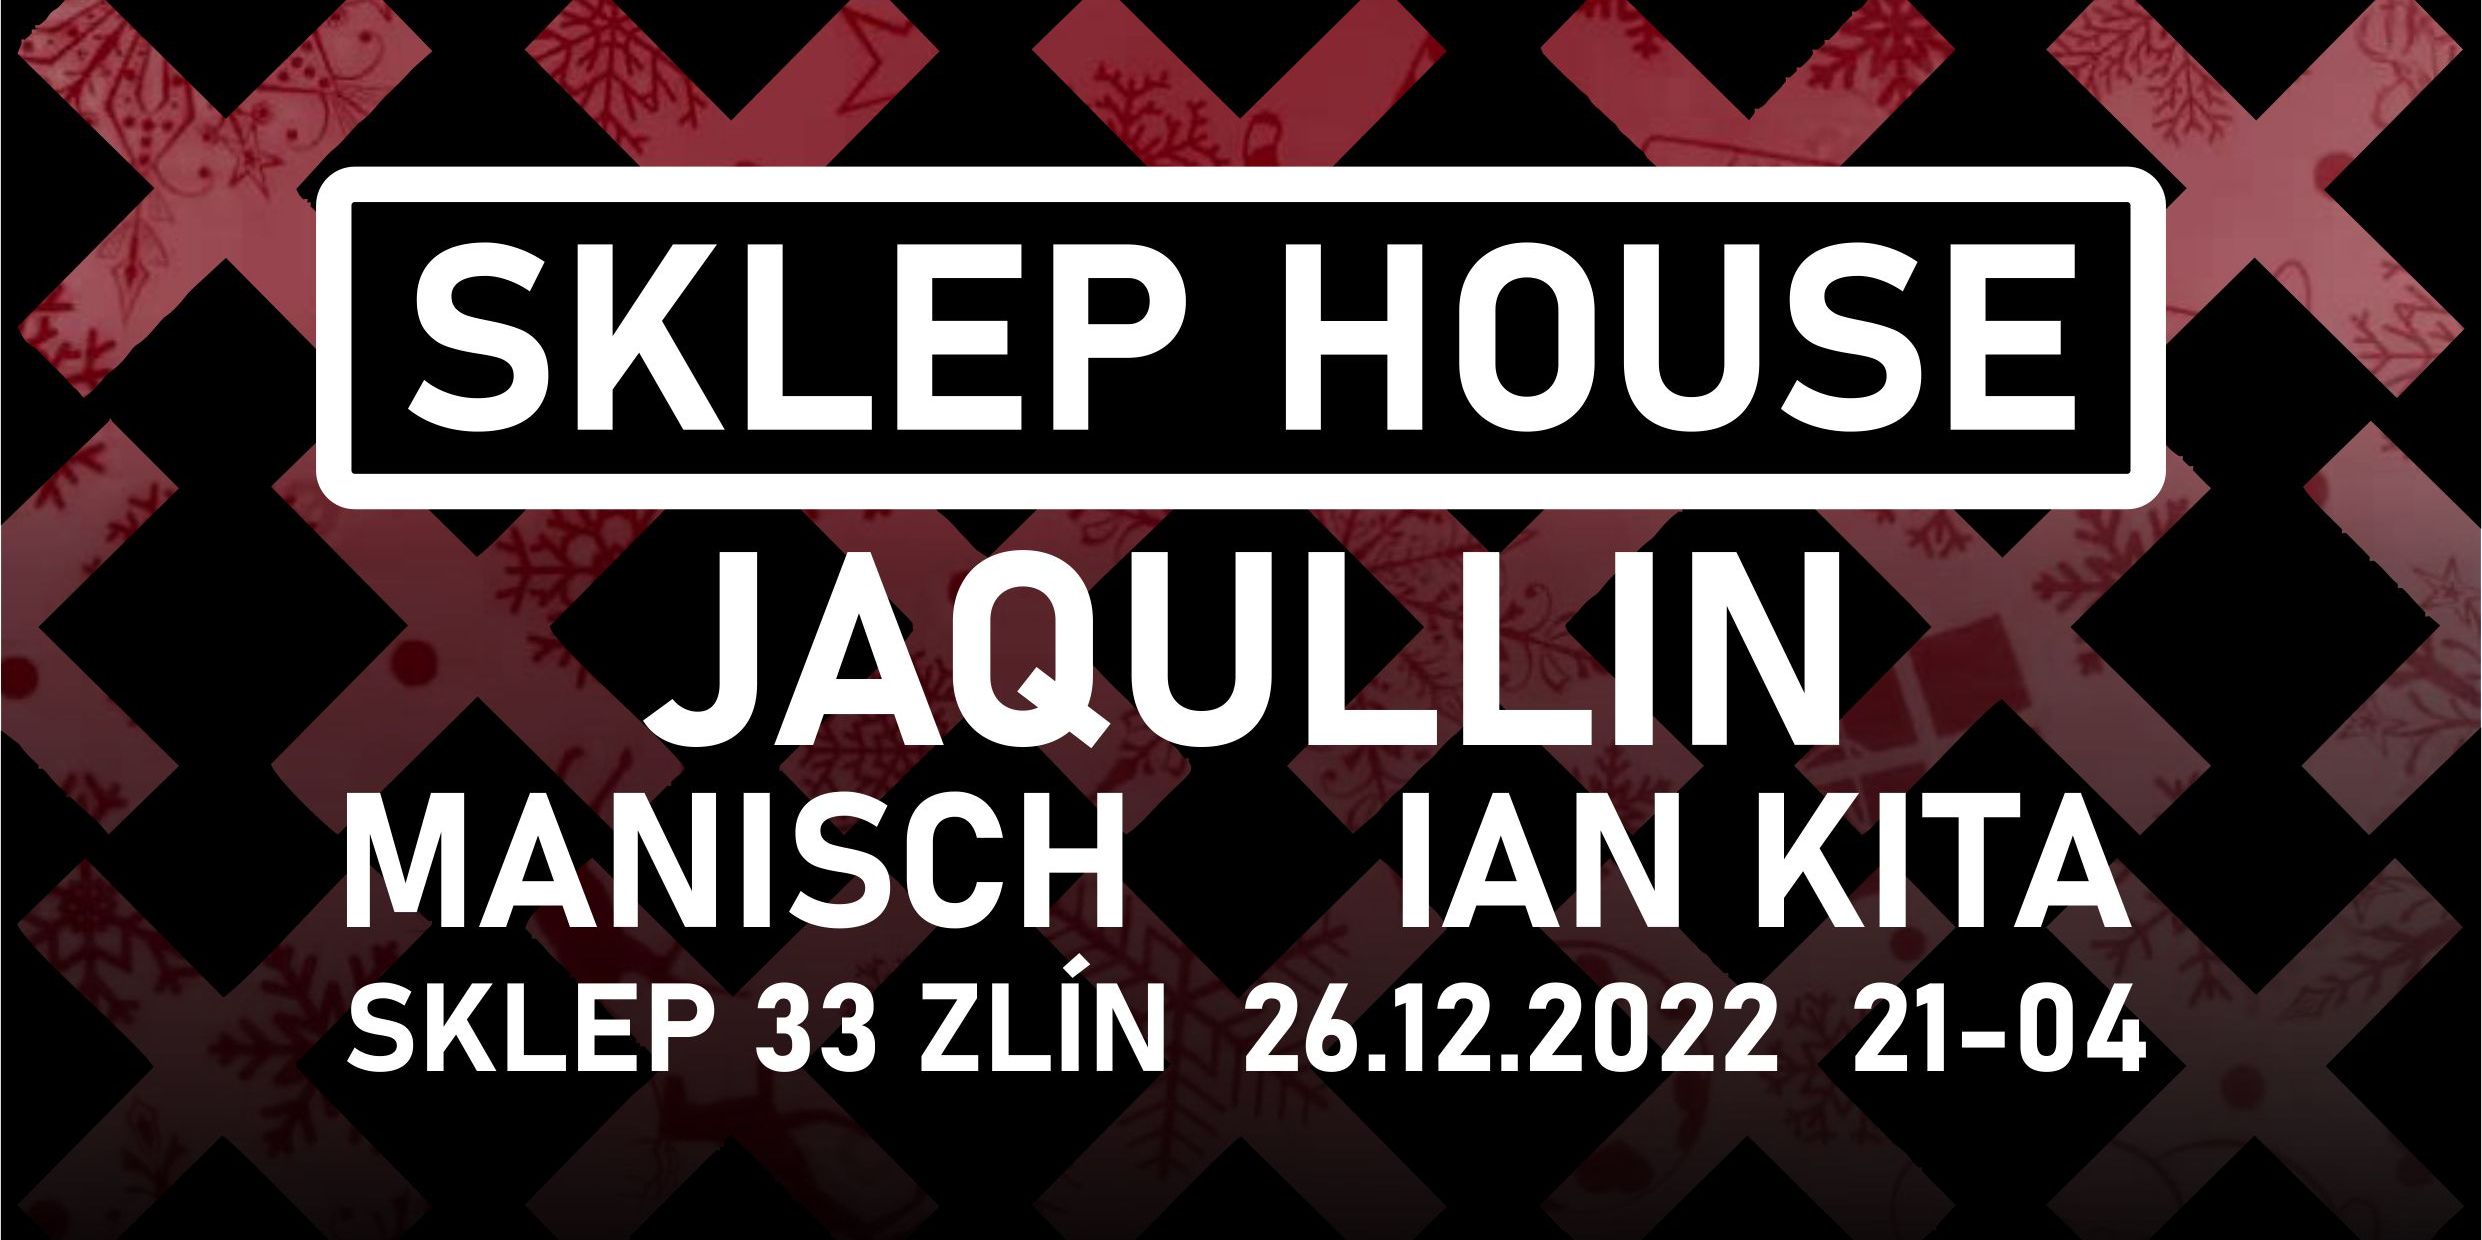 SKLEP HOUSE with Jaqullin